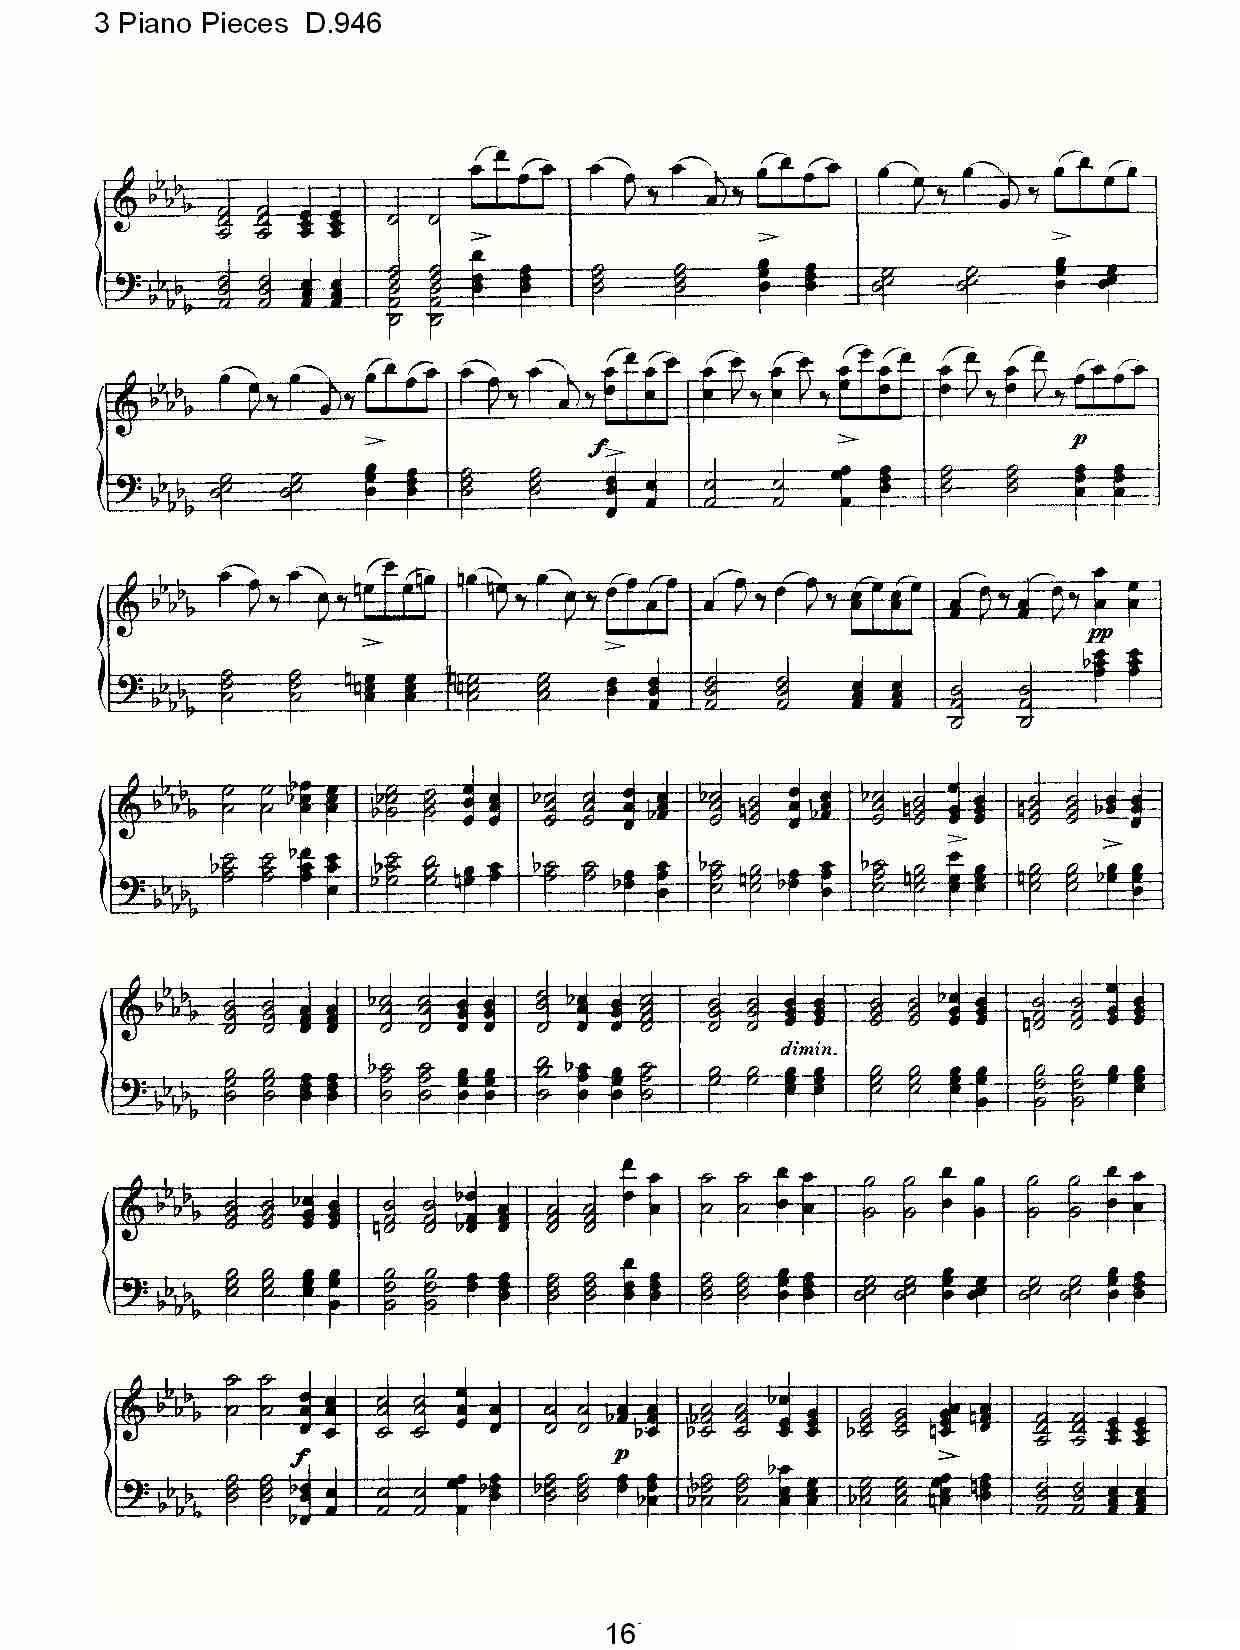 3 Piano Pieces D.946（钢琴三联奏D.946）钢琴曲谱（图16）